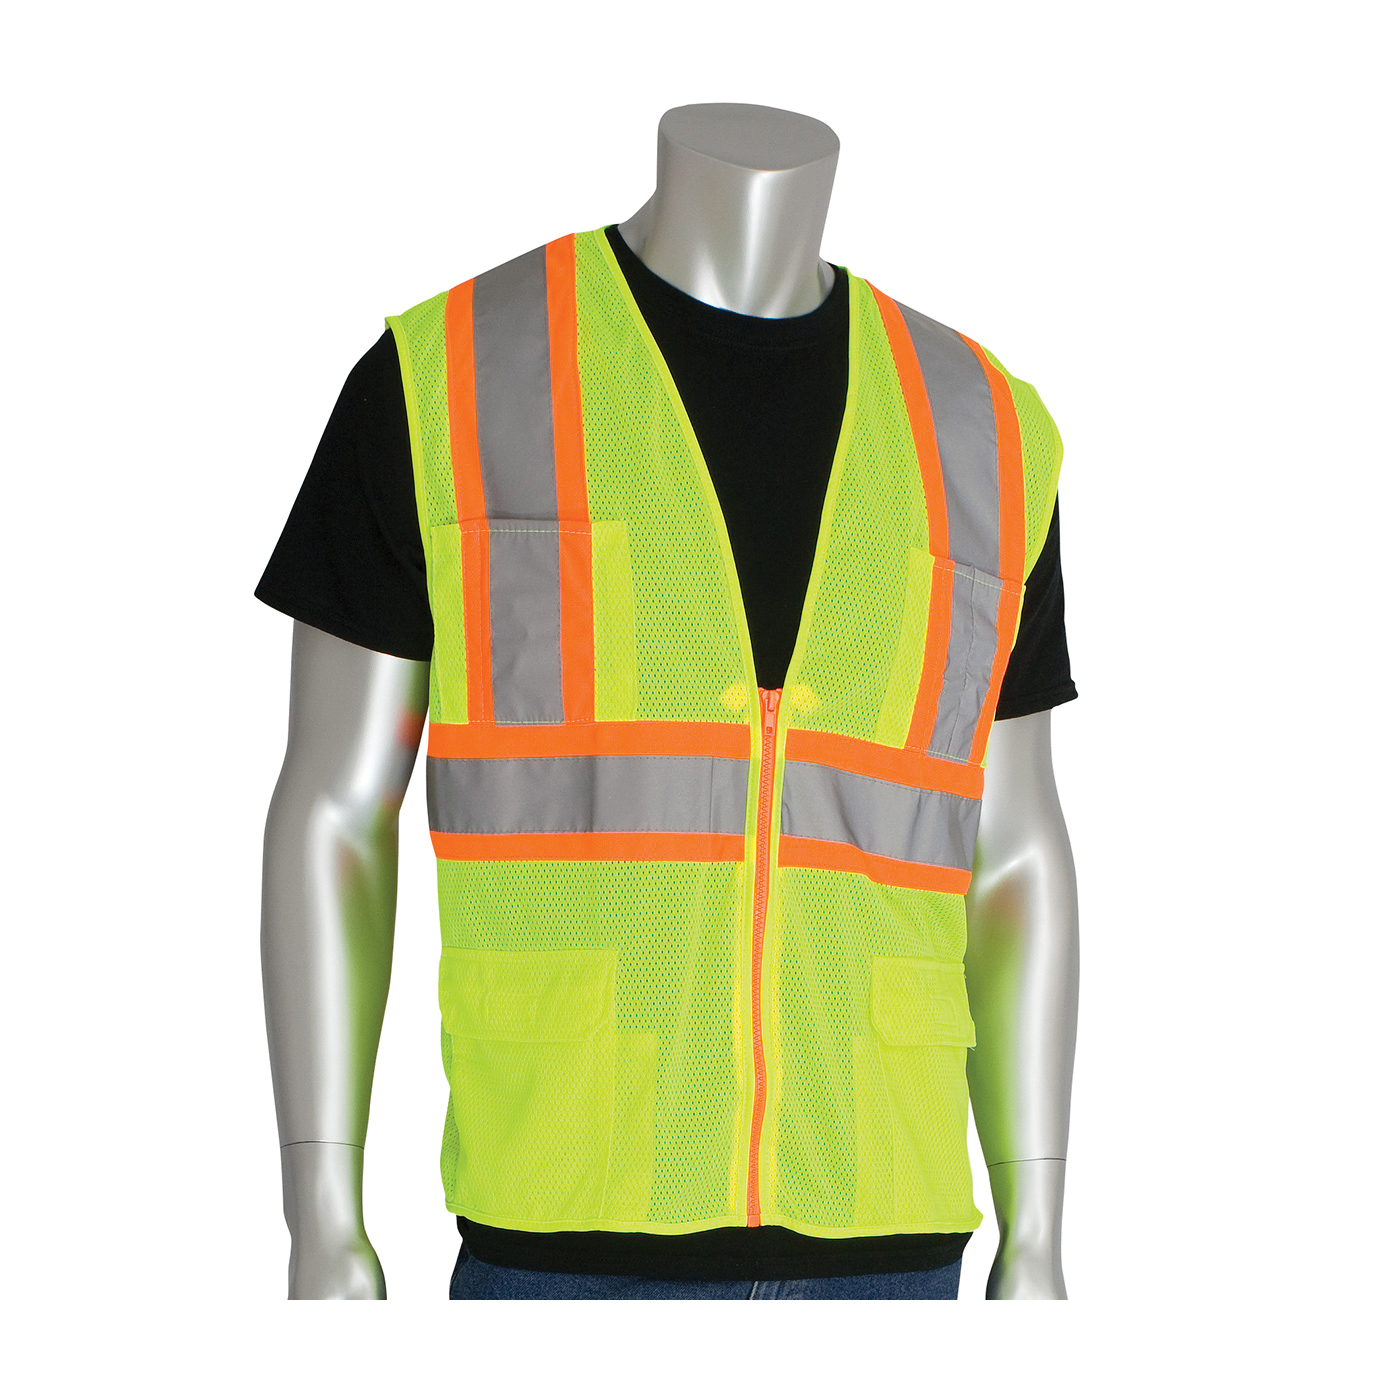 PIP® 302-MAPMLY-M 2-Tone Premium Surveyor Safety Vest, M, Hi-Viz Lime Yellow, Polyester, Zipper Closure, 11 Pockets, ANSI Class: Class 2, Specifications Met: ANSI 107 Type R